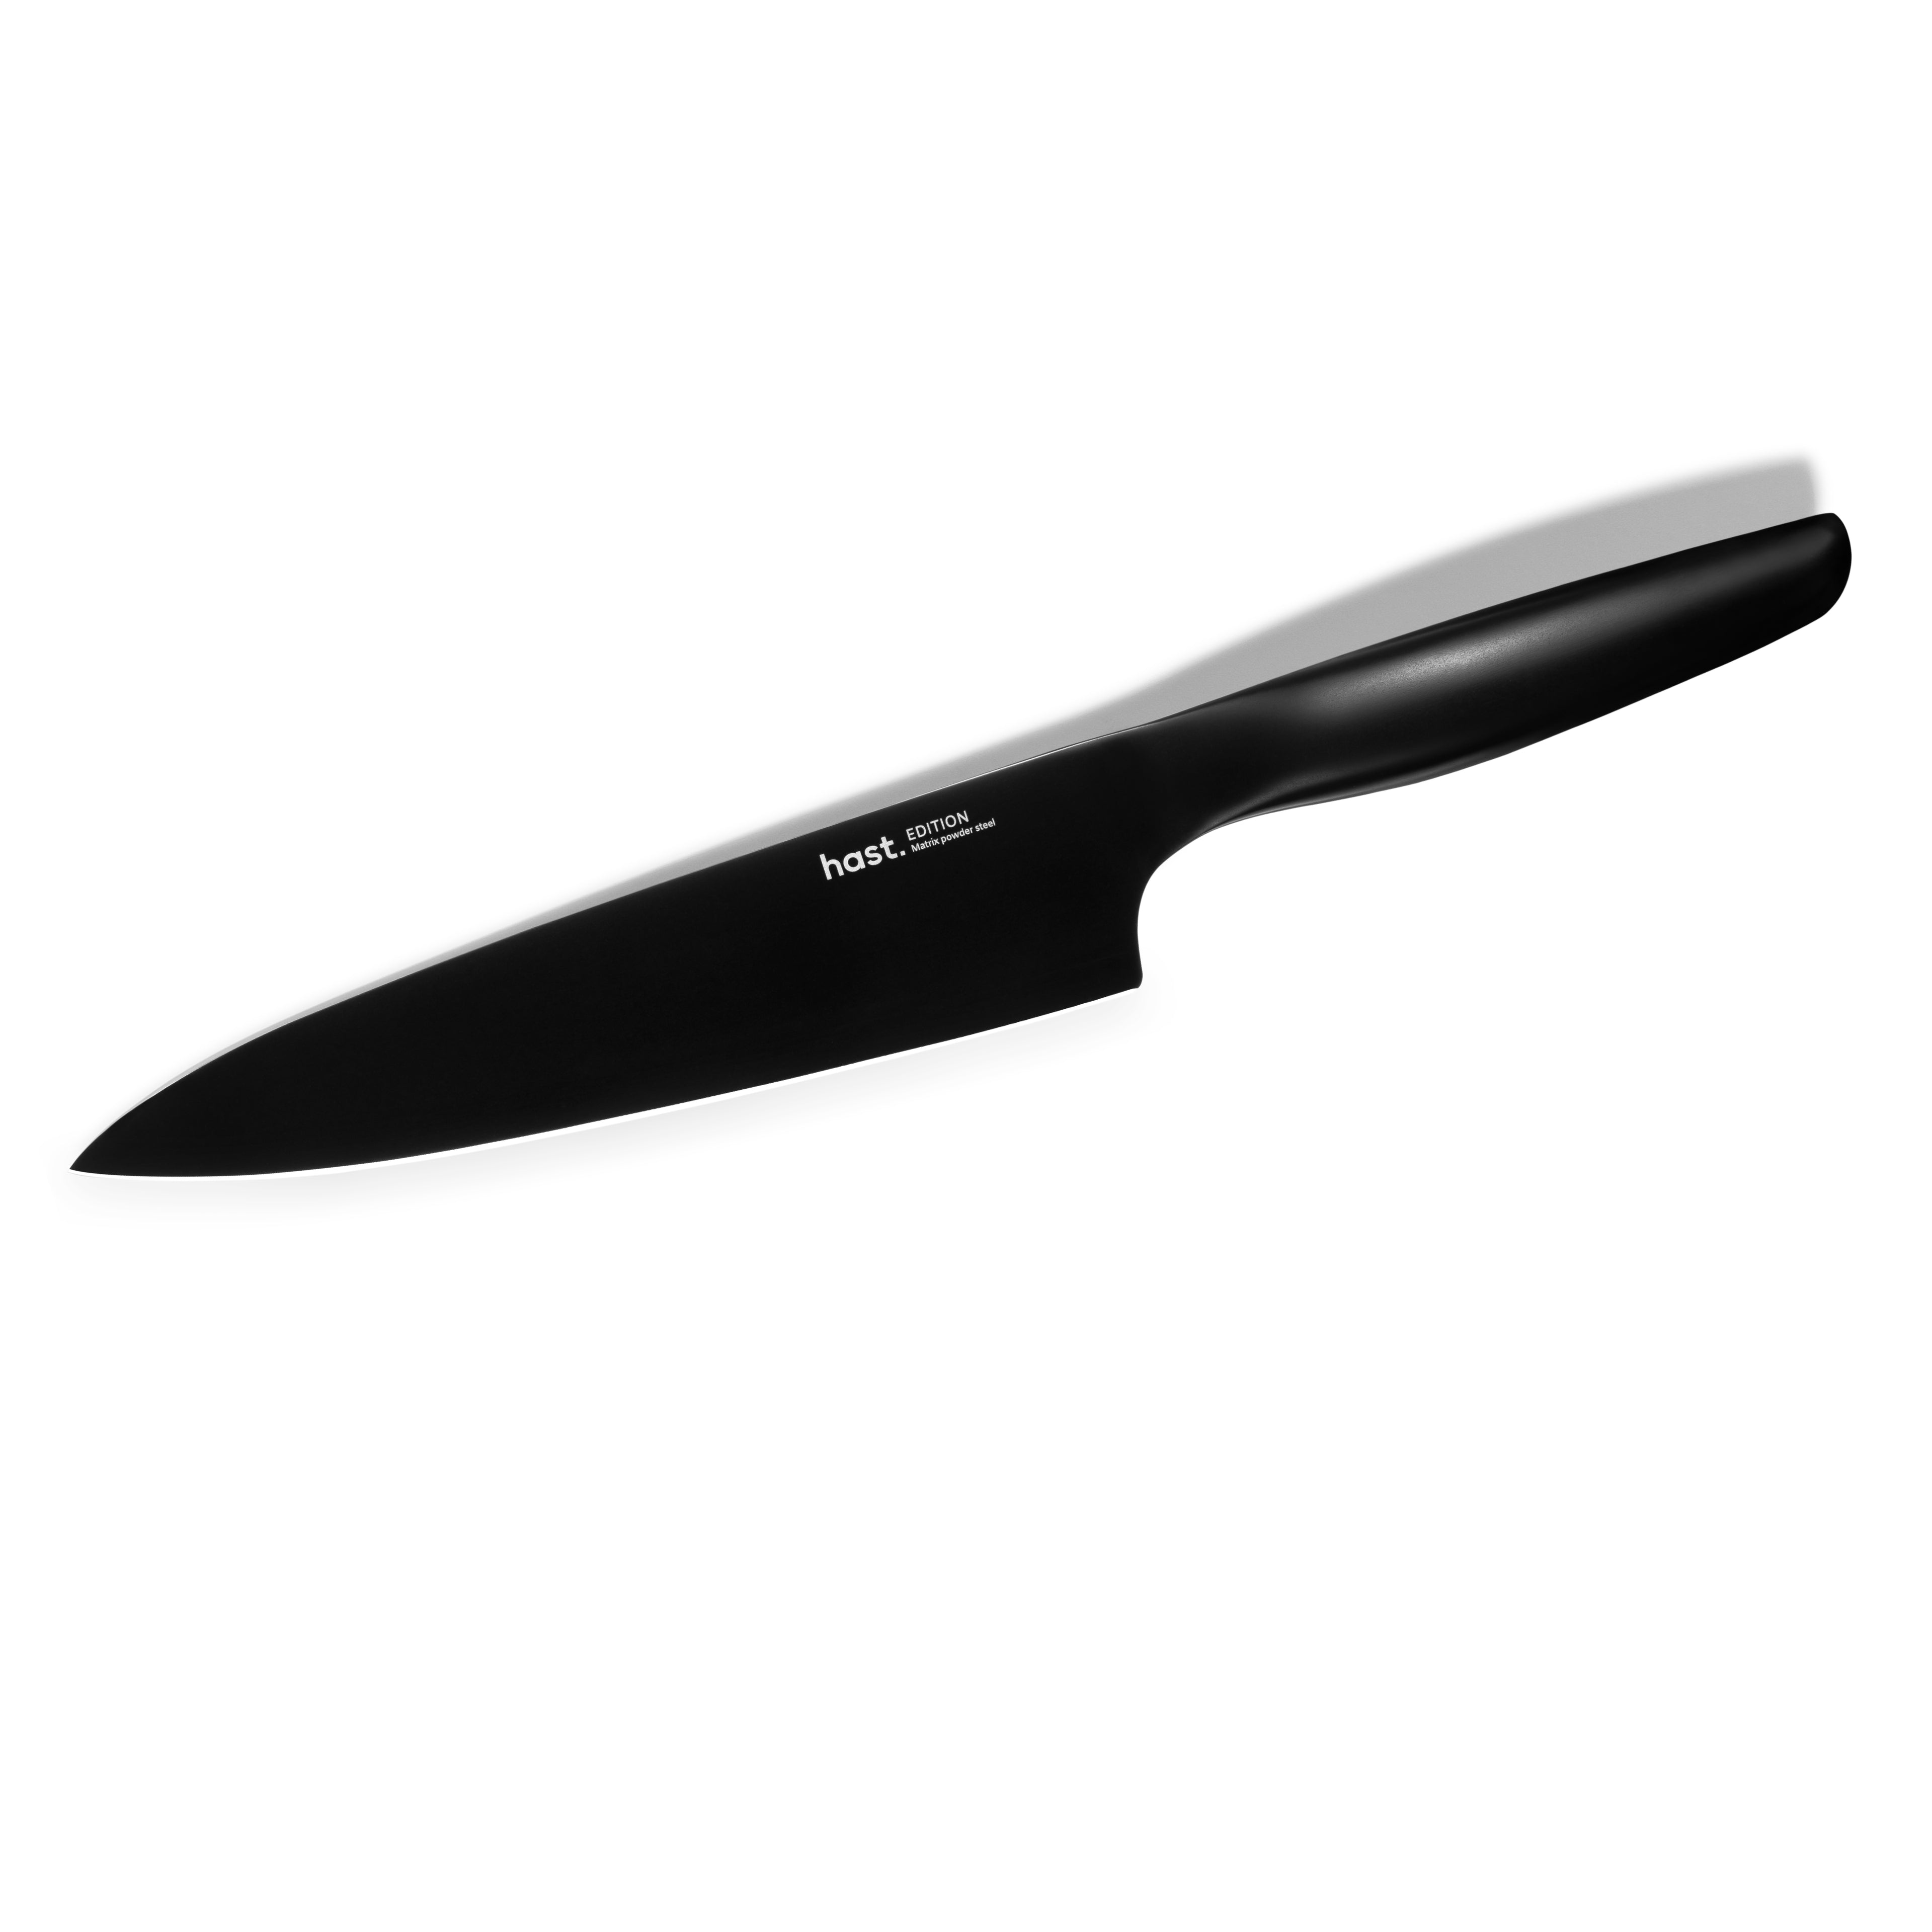 BergHOFF Modern Matte Black Knife Set, 8 Styles, Steel Titanium